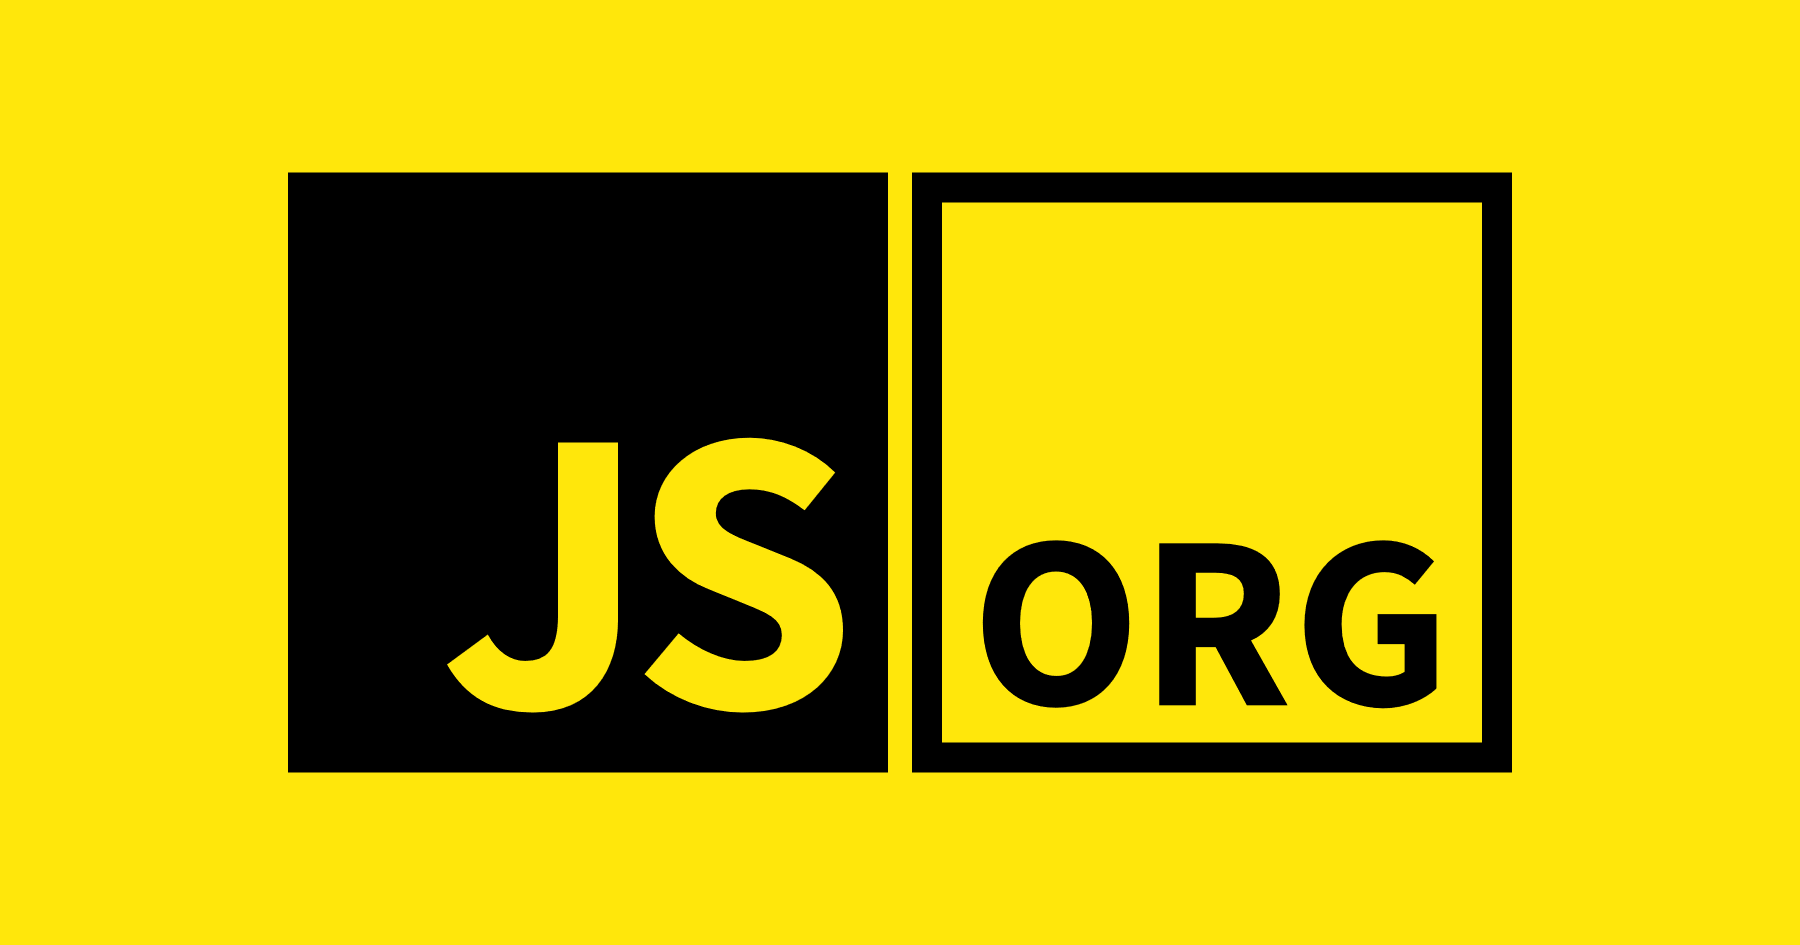 (c) Js.org